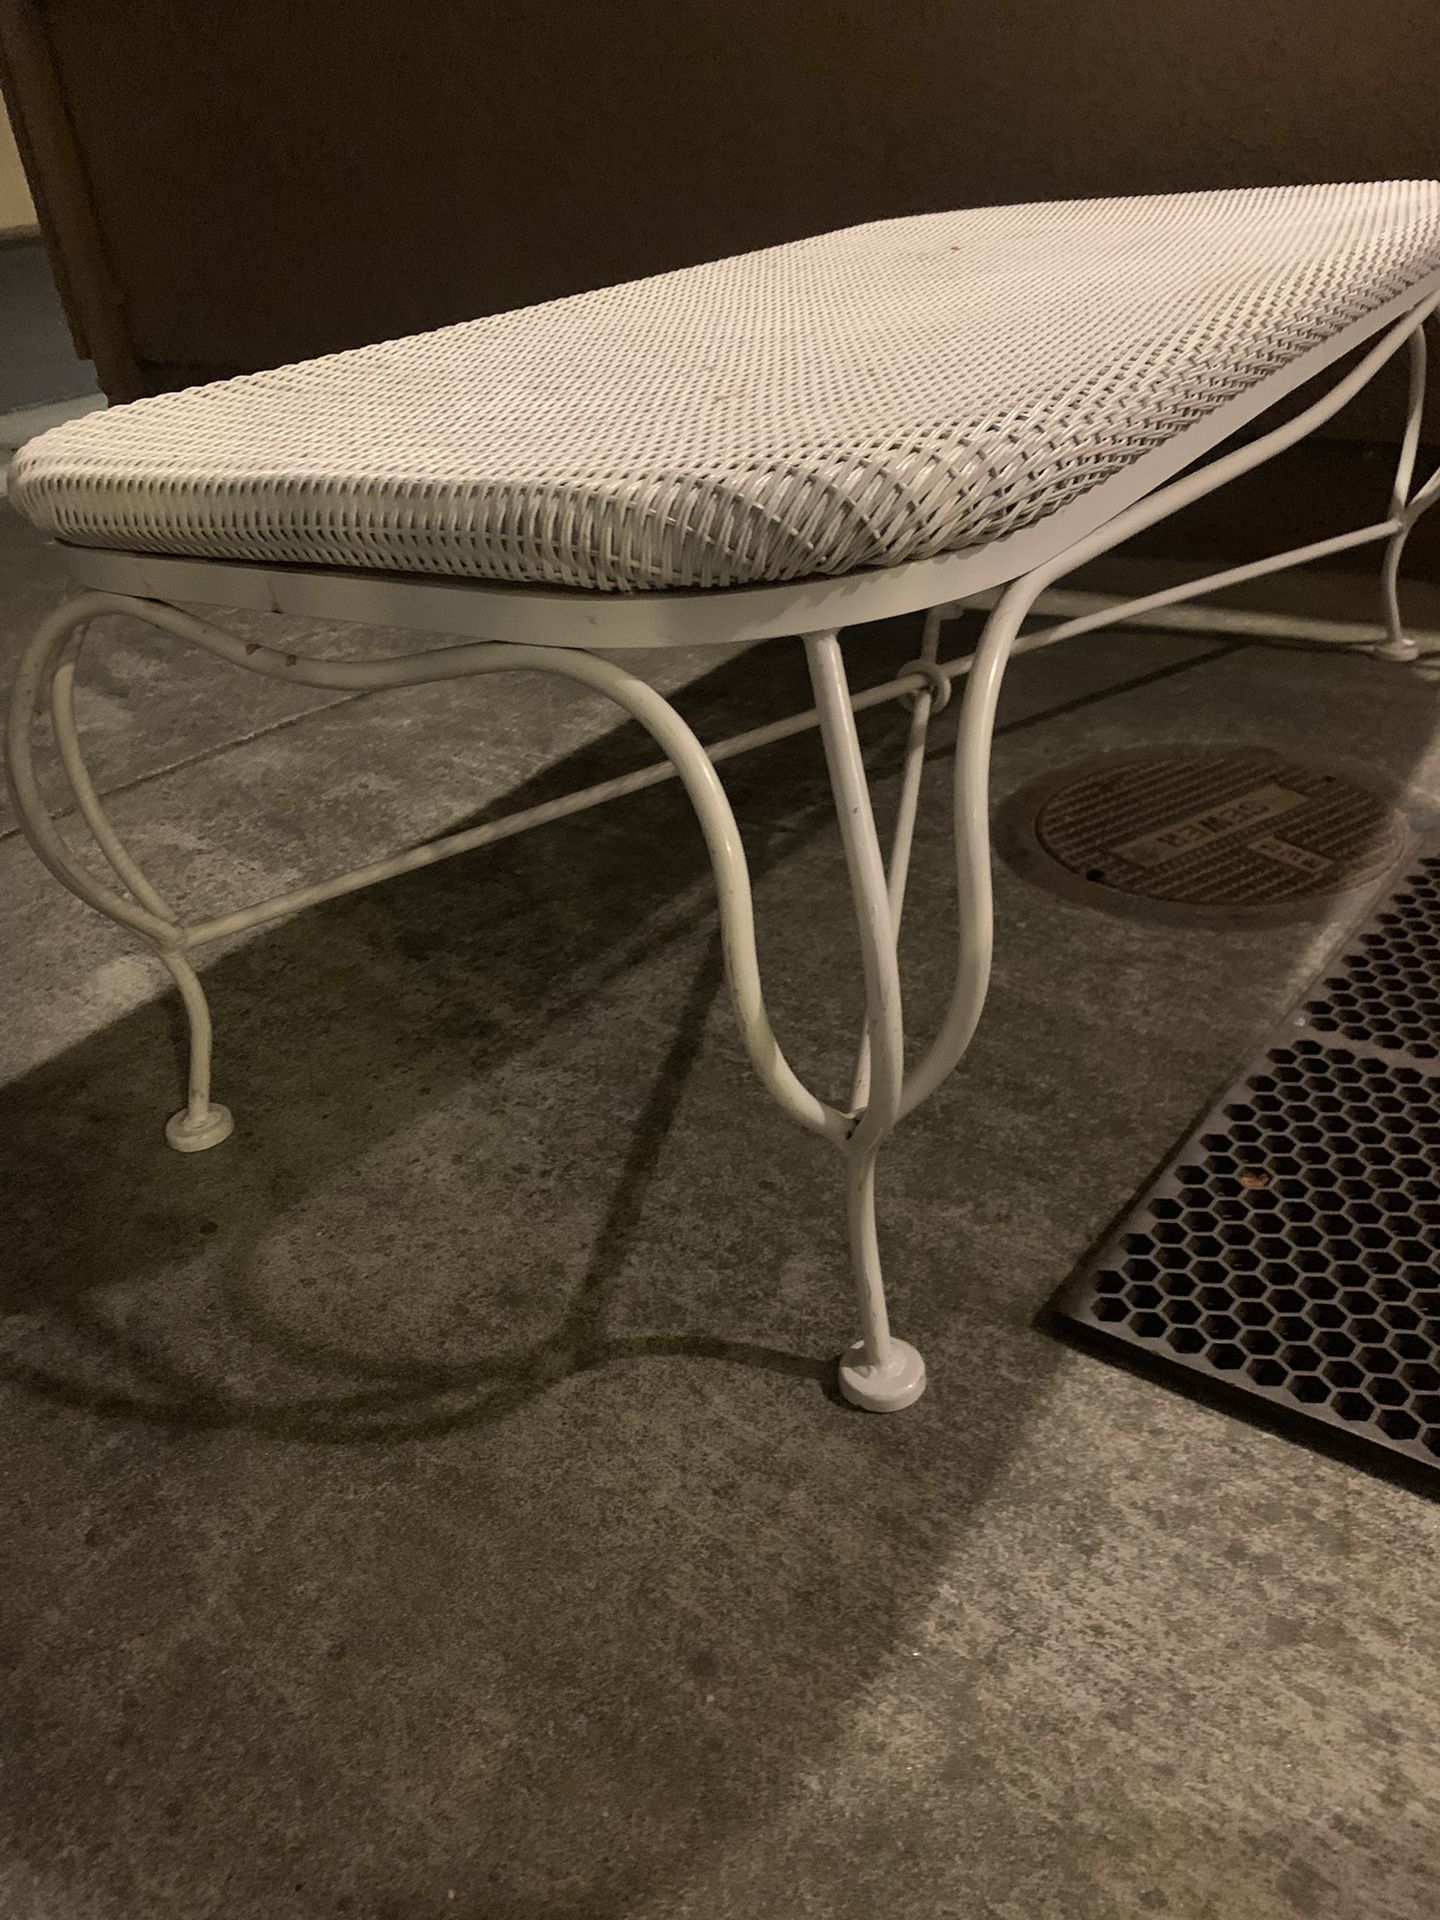  Outdoor Patio Table